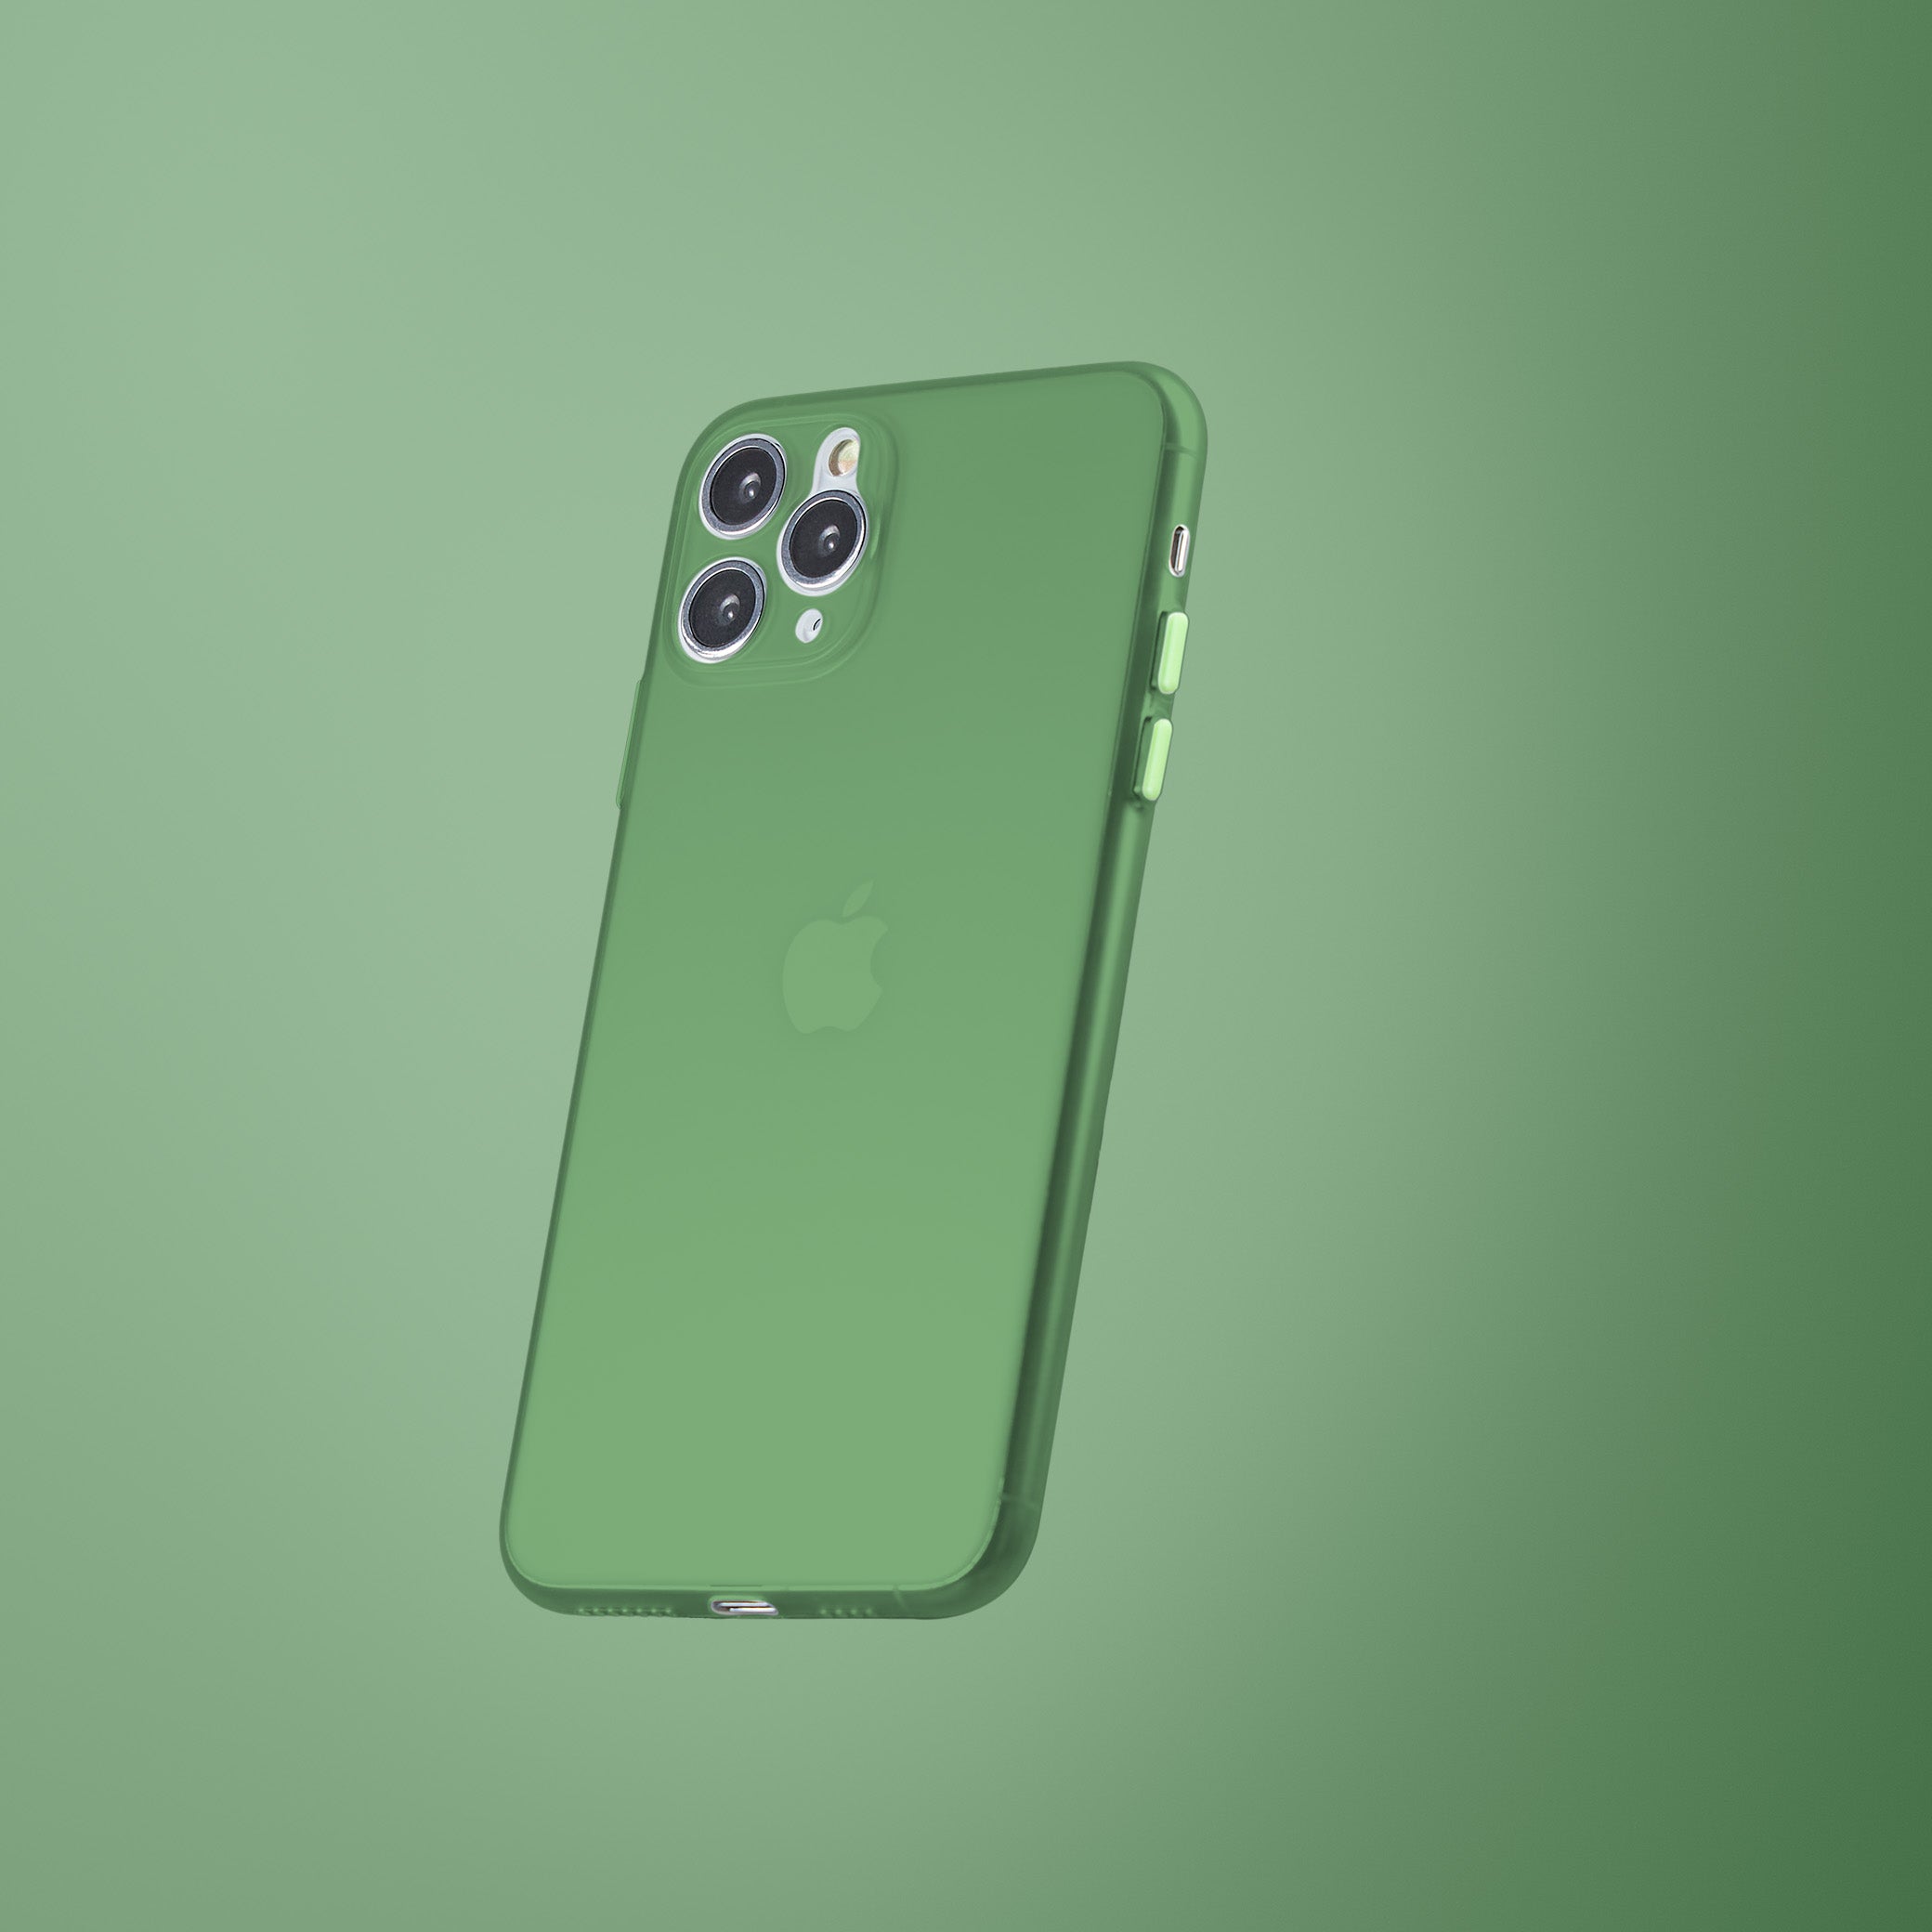 Super Slim Case 2.0 for iPhone 11 Pro - Avacado Green